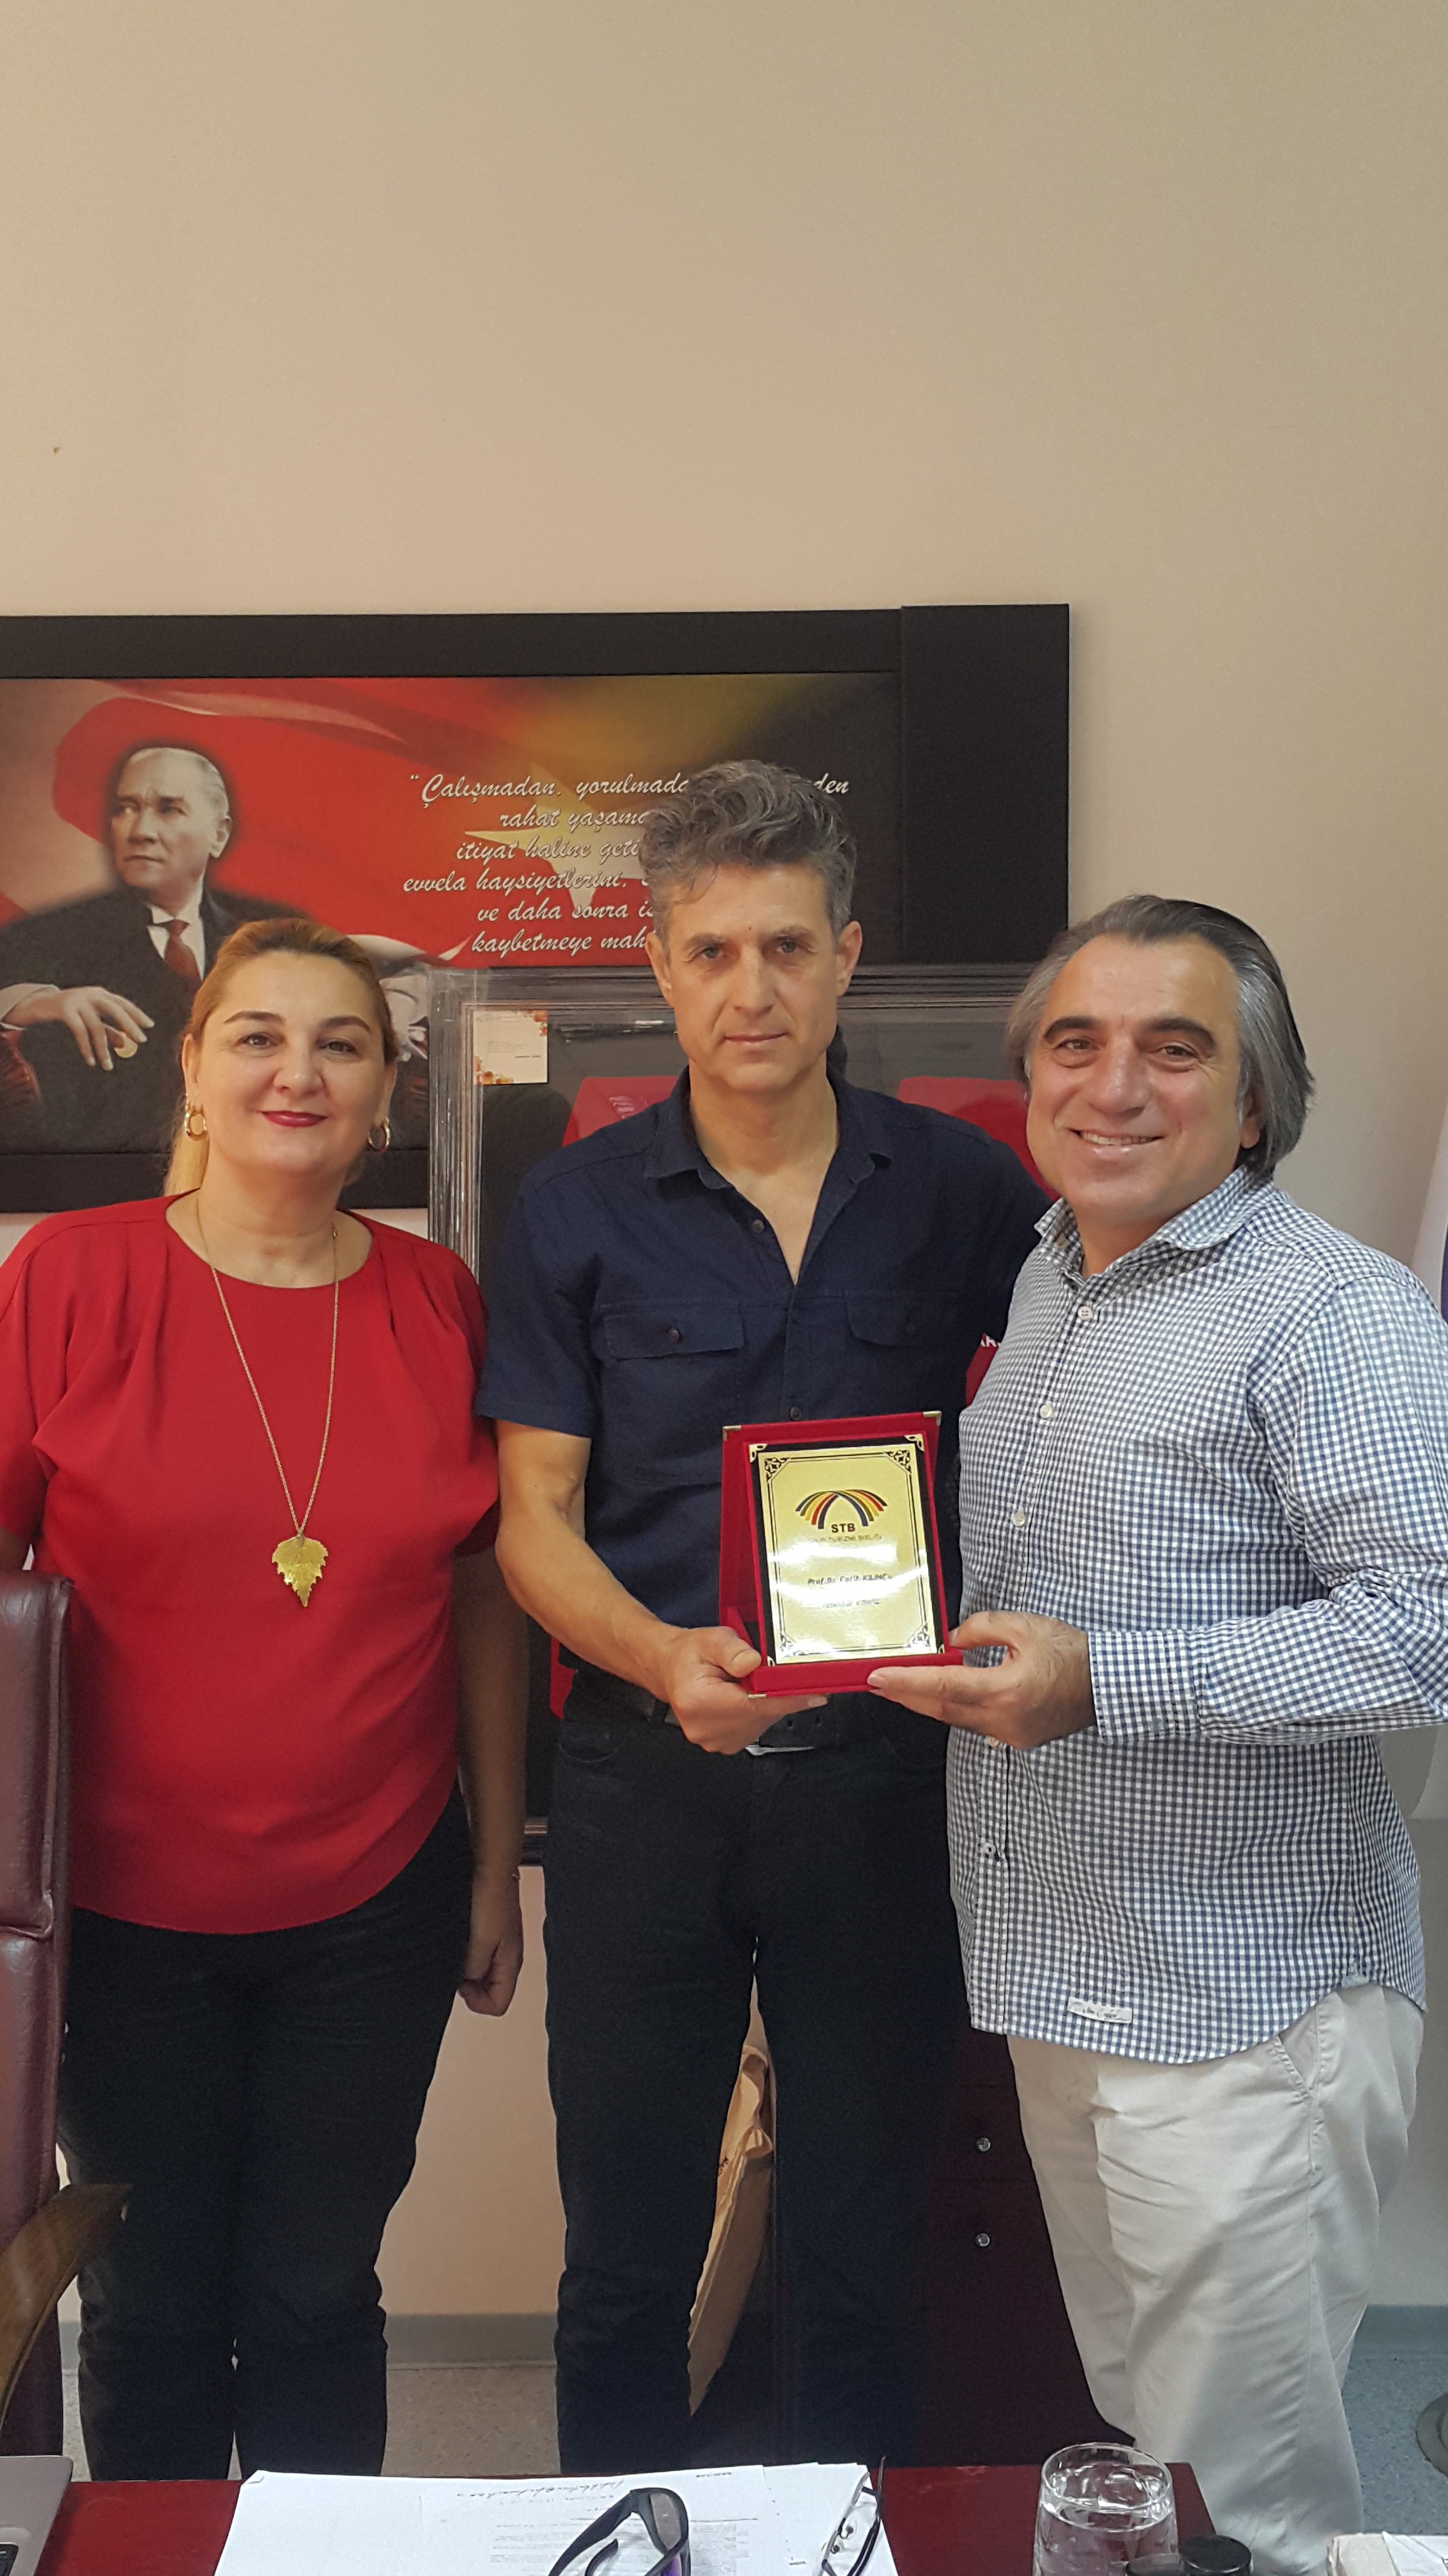 Prof Dr Fatih Kılınç'a teşekkür ettik.